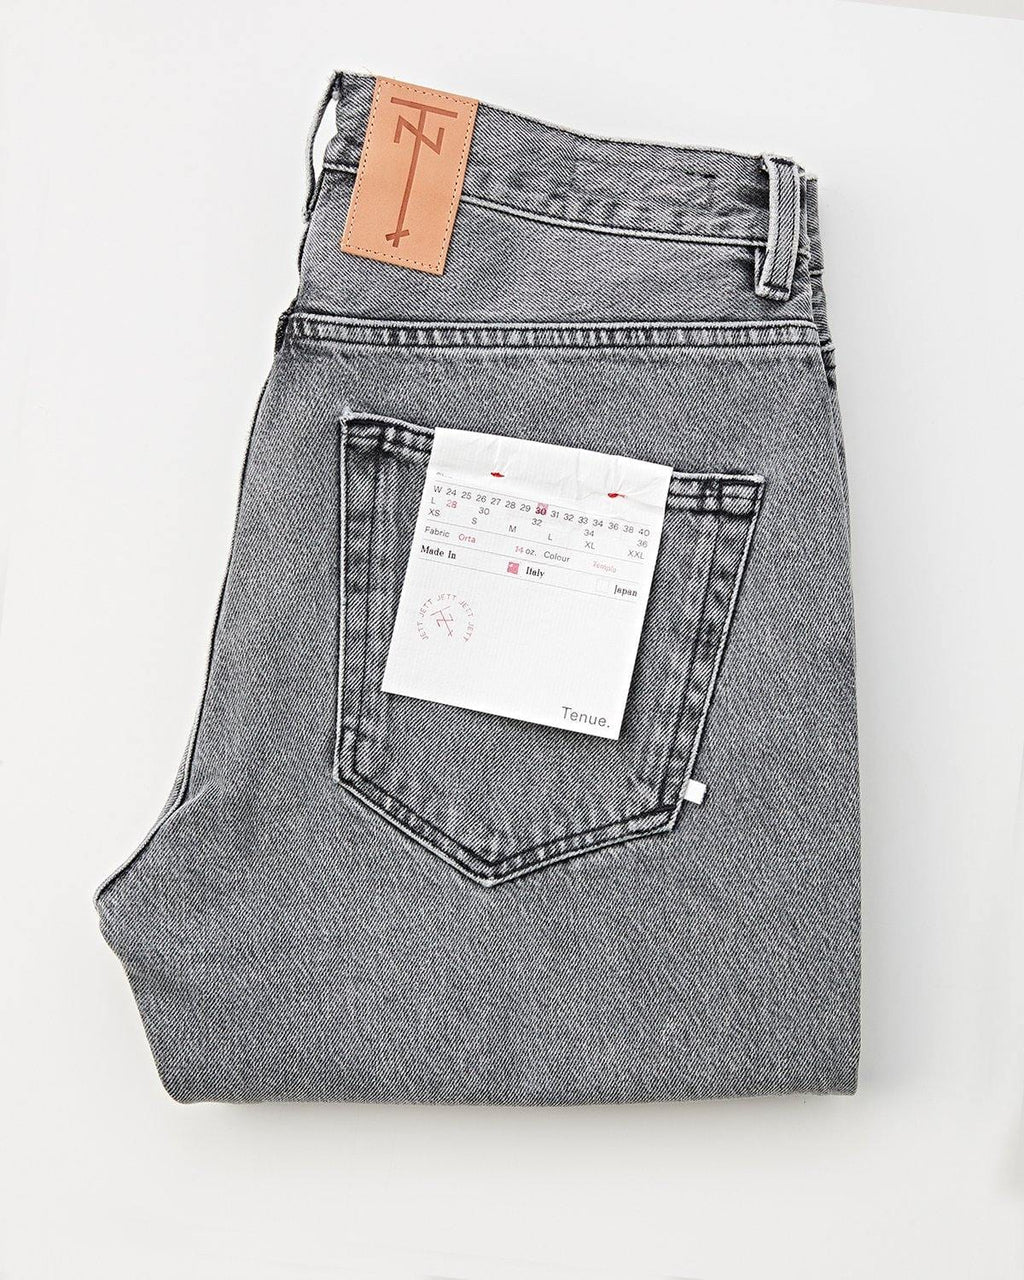 Comprar Calça Jeans Feminina c/cinto-Bi strech 360-LD2101 - Loyal Denim